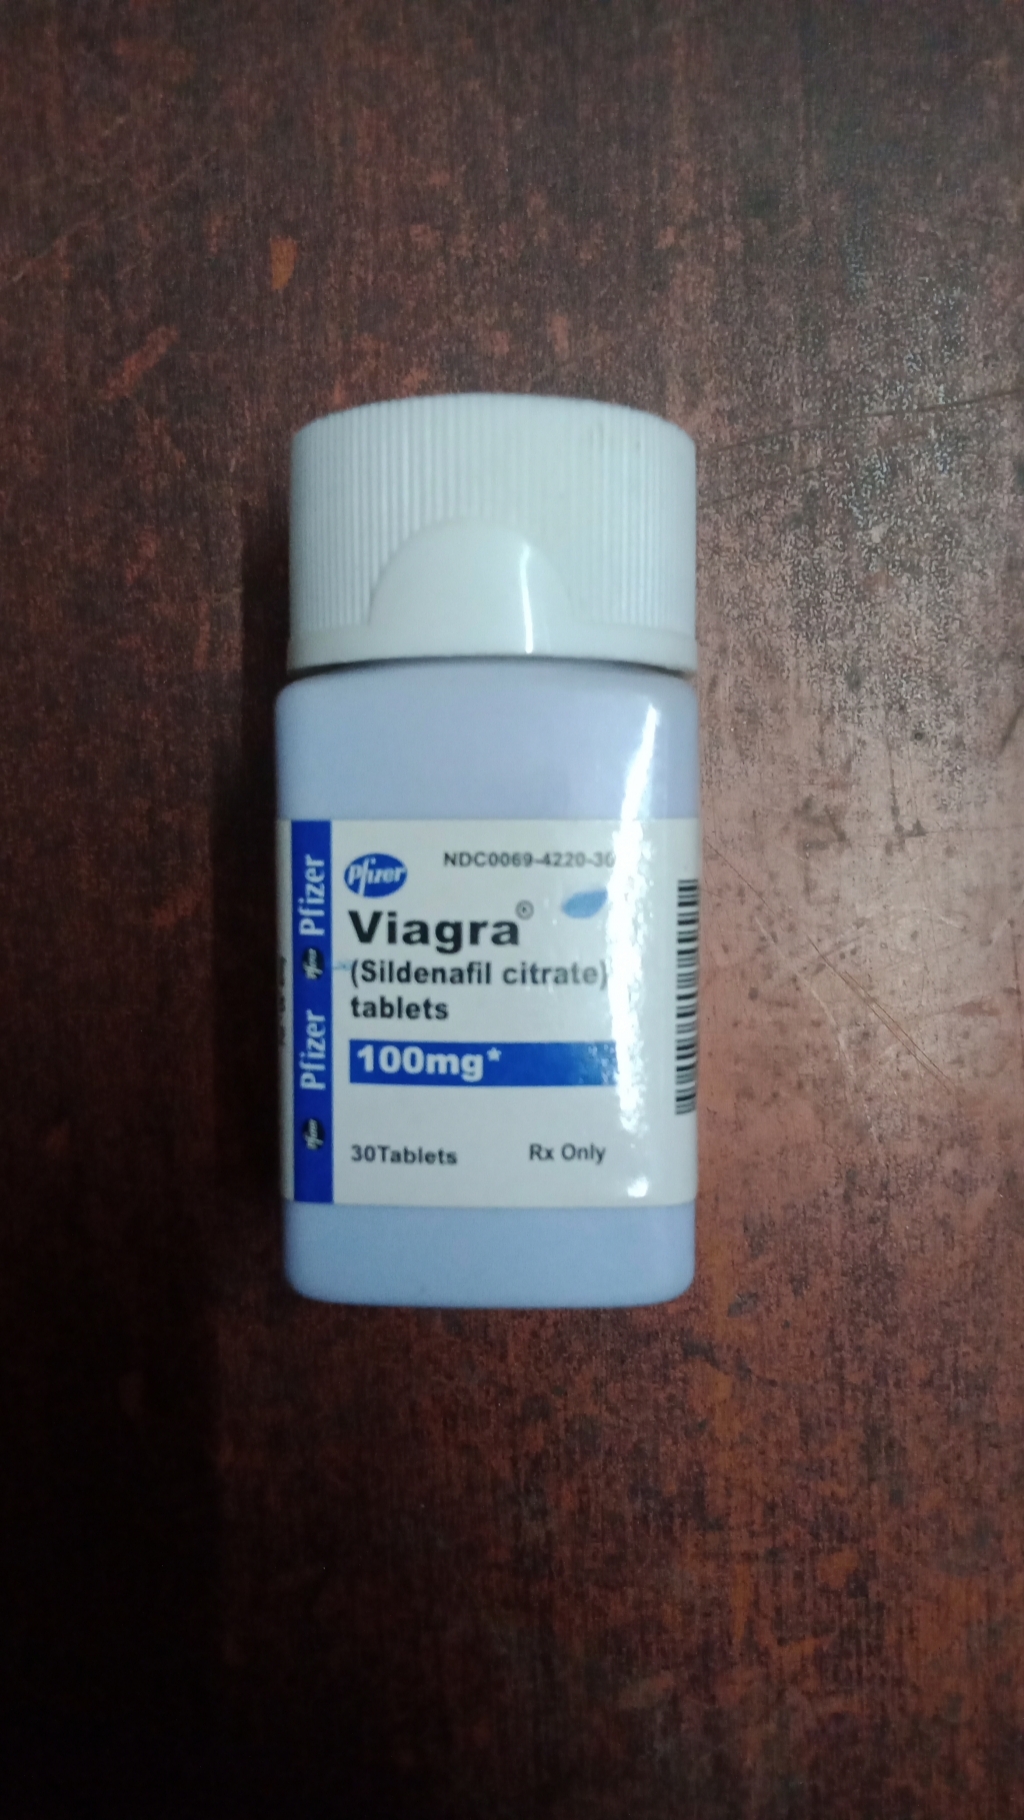 Buy Original 30 Tab. VIAGRA 100mg (P fizer )For Sex timing in Pakistan